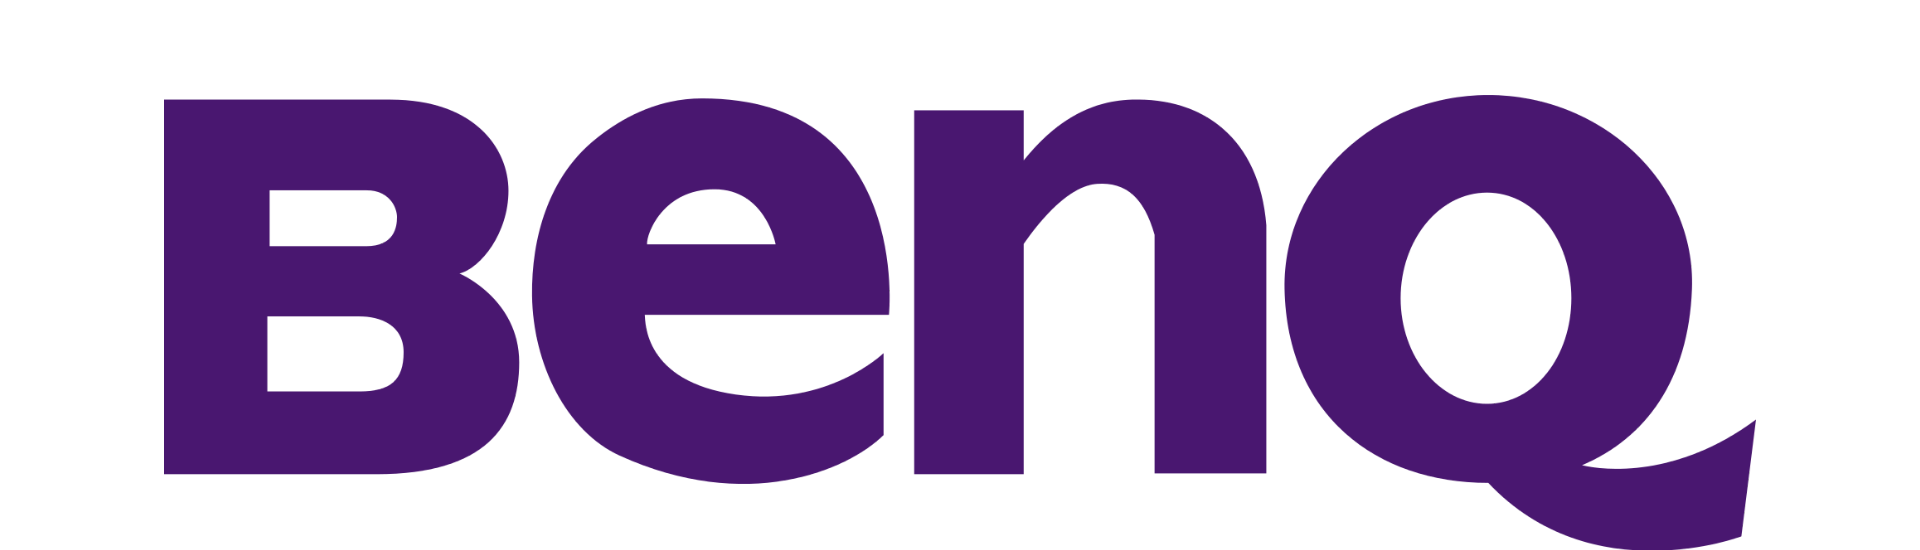 The logo of BenQ